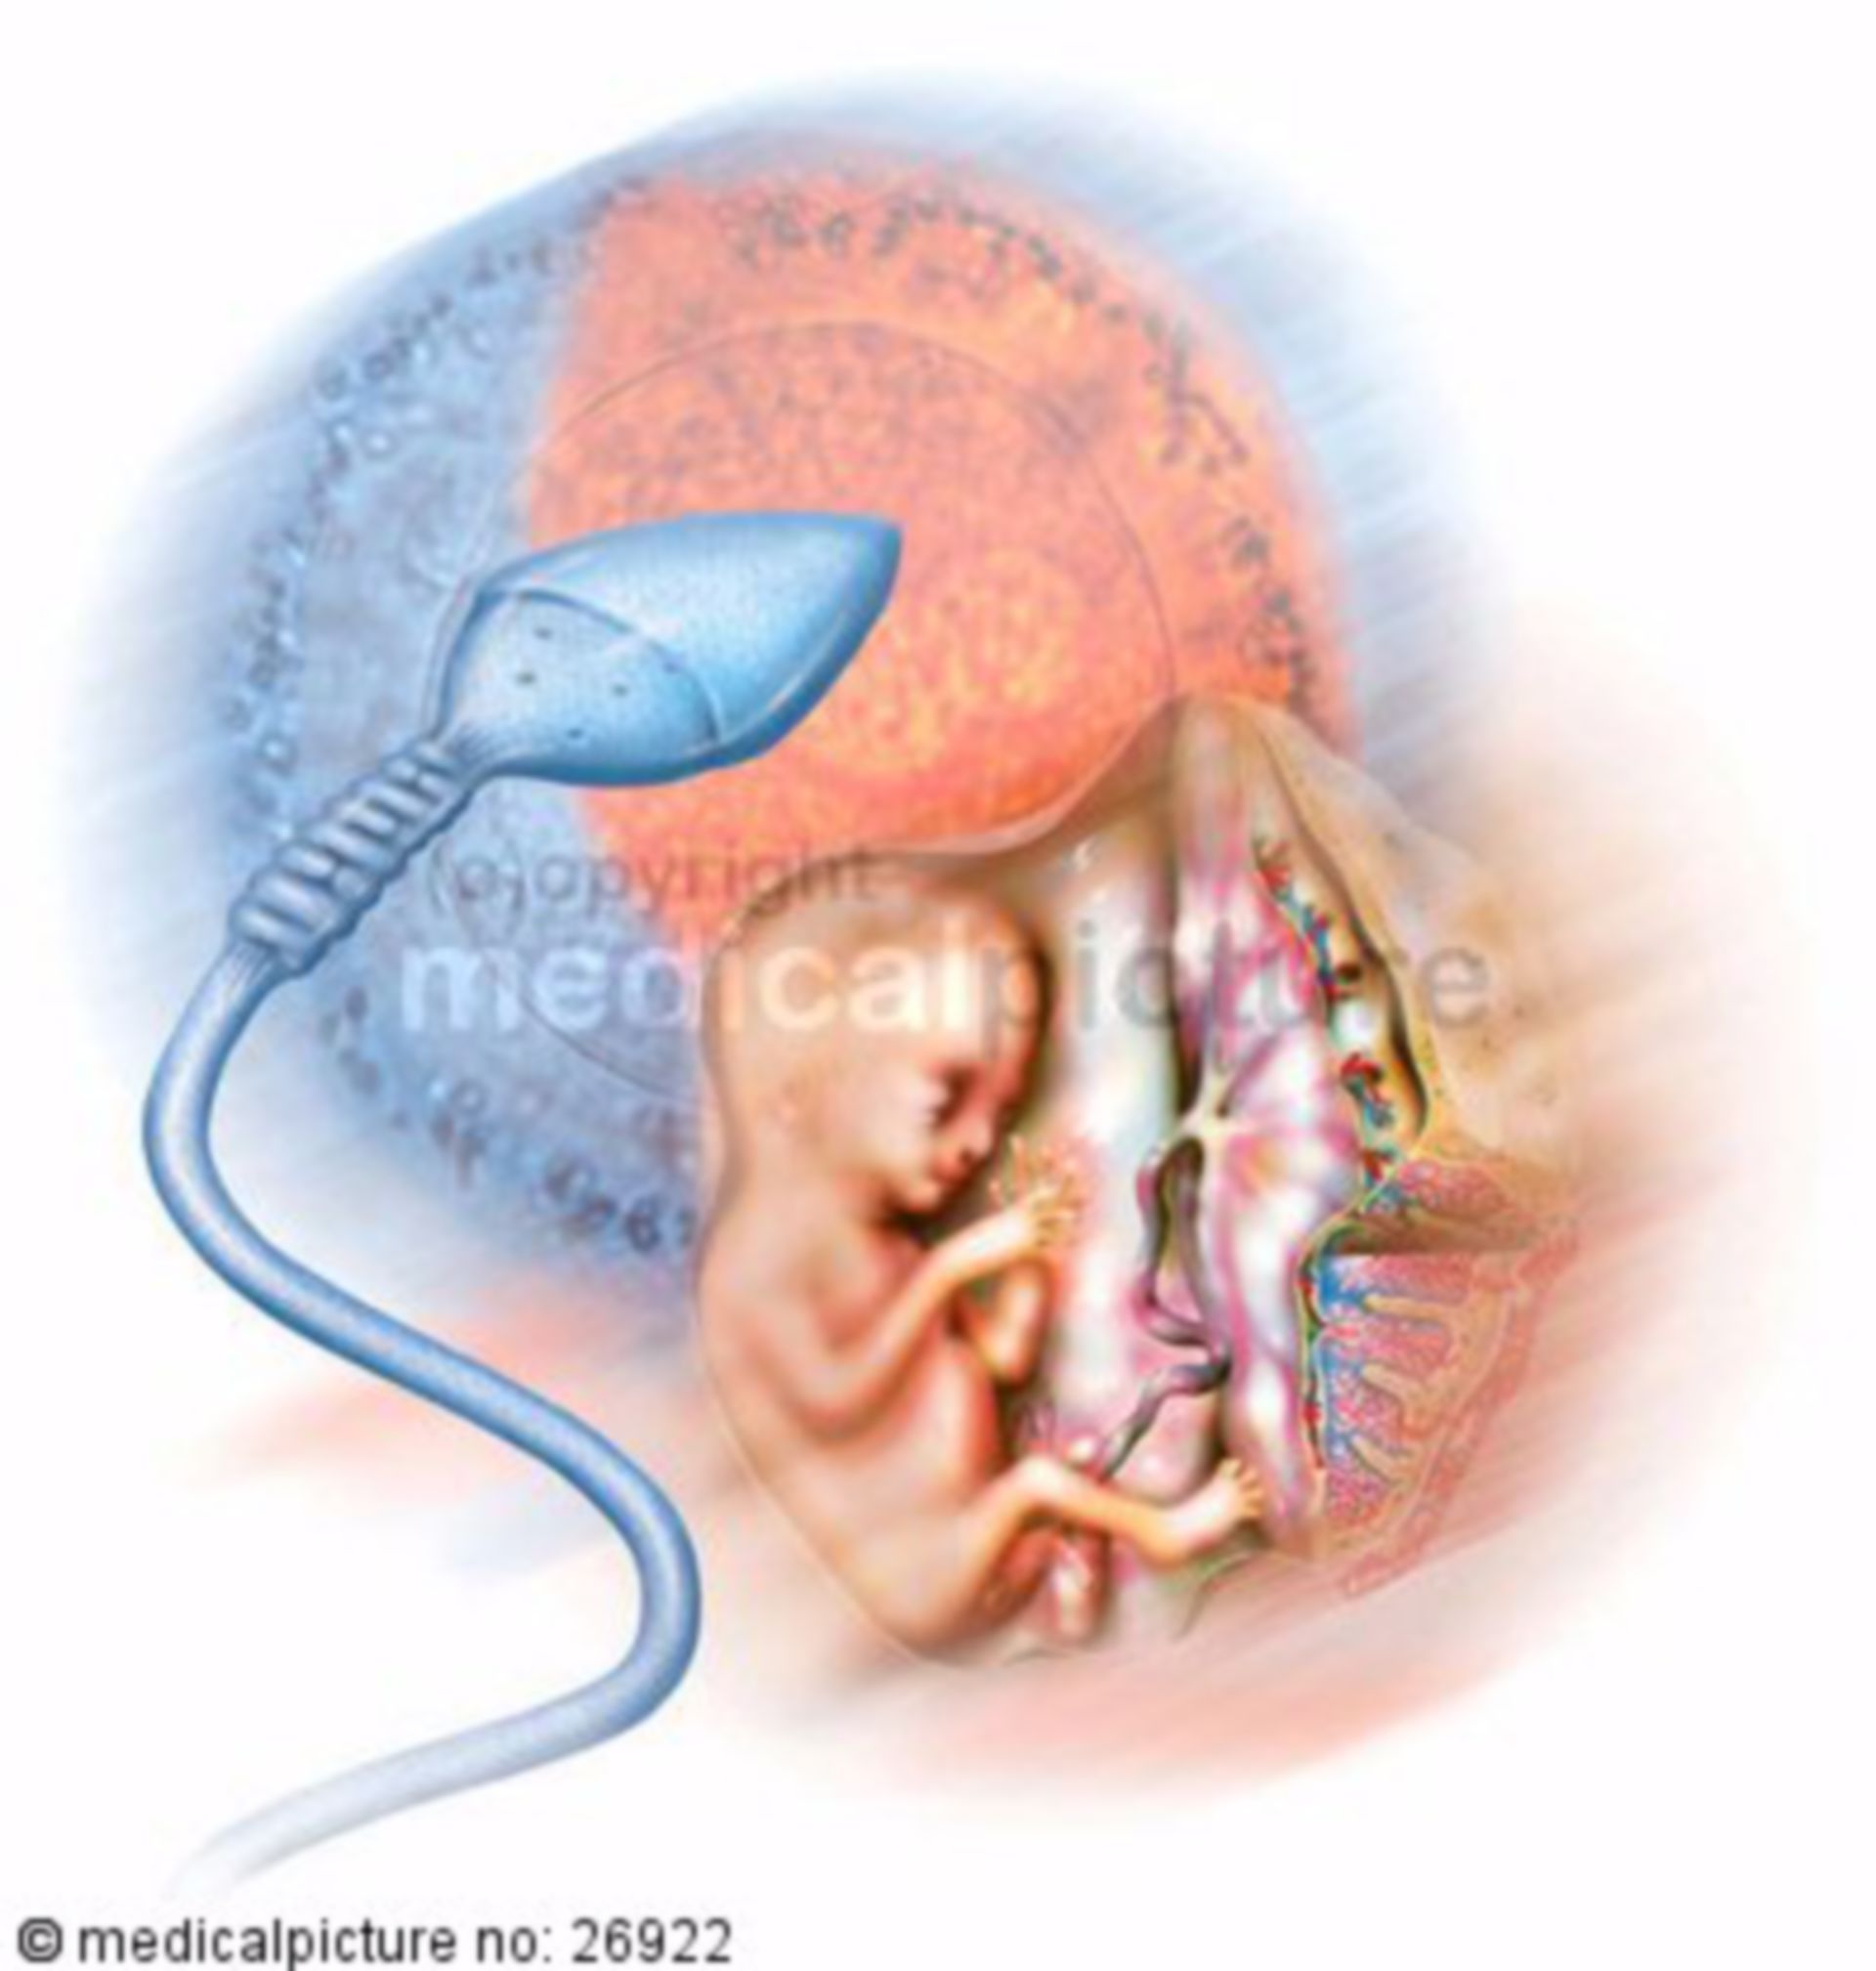 Embyro with placenta, sperm